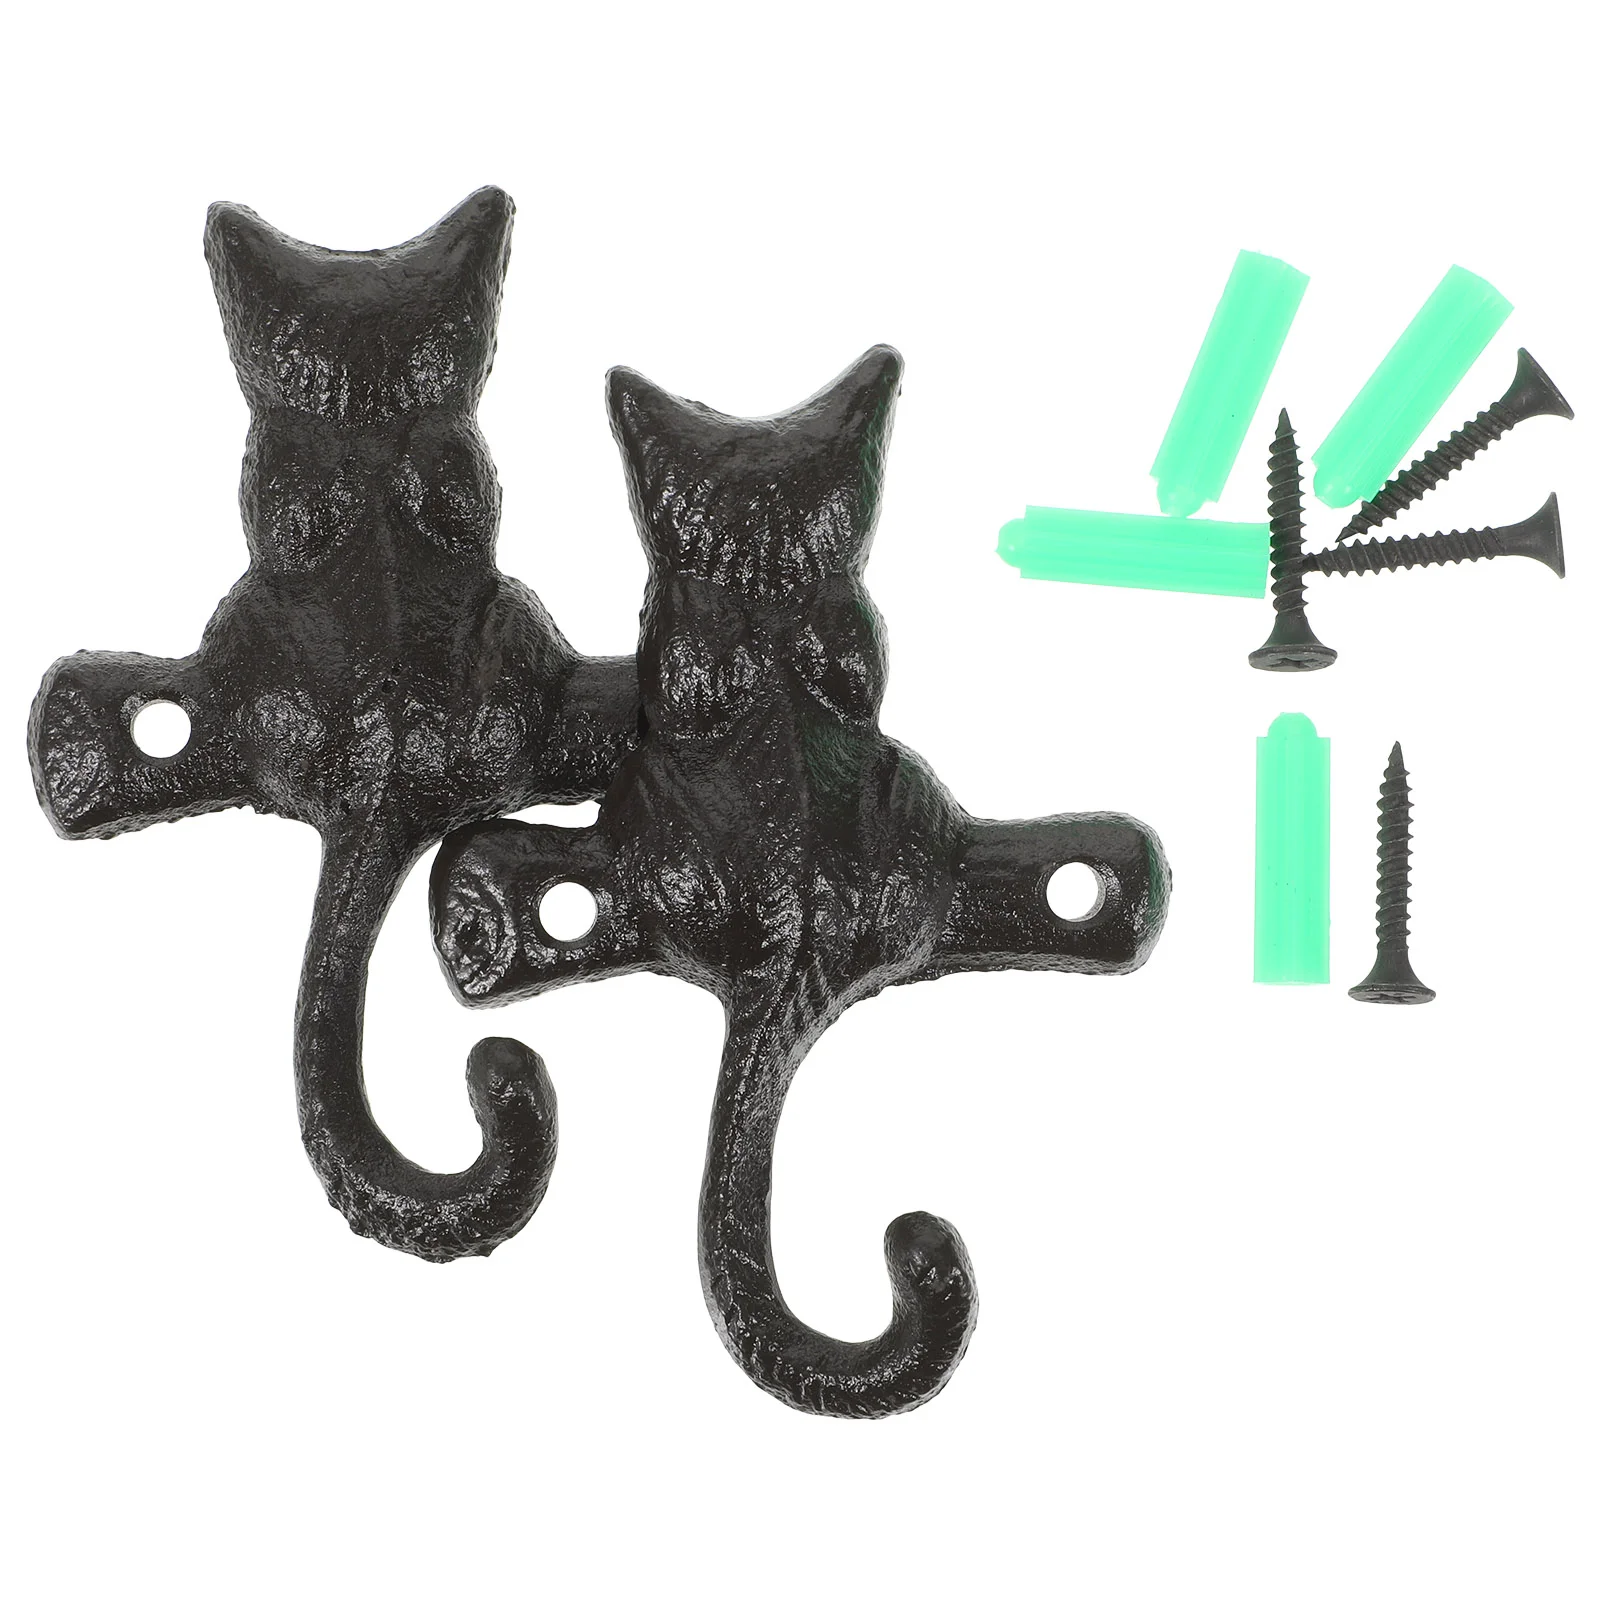 2 Pcs European Classical Cast Iron Cat Hook Wall Mounted Coat Hooks Purse Cute Key Hat Hangers Decorative